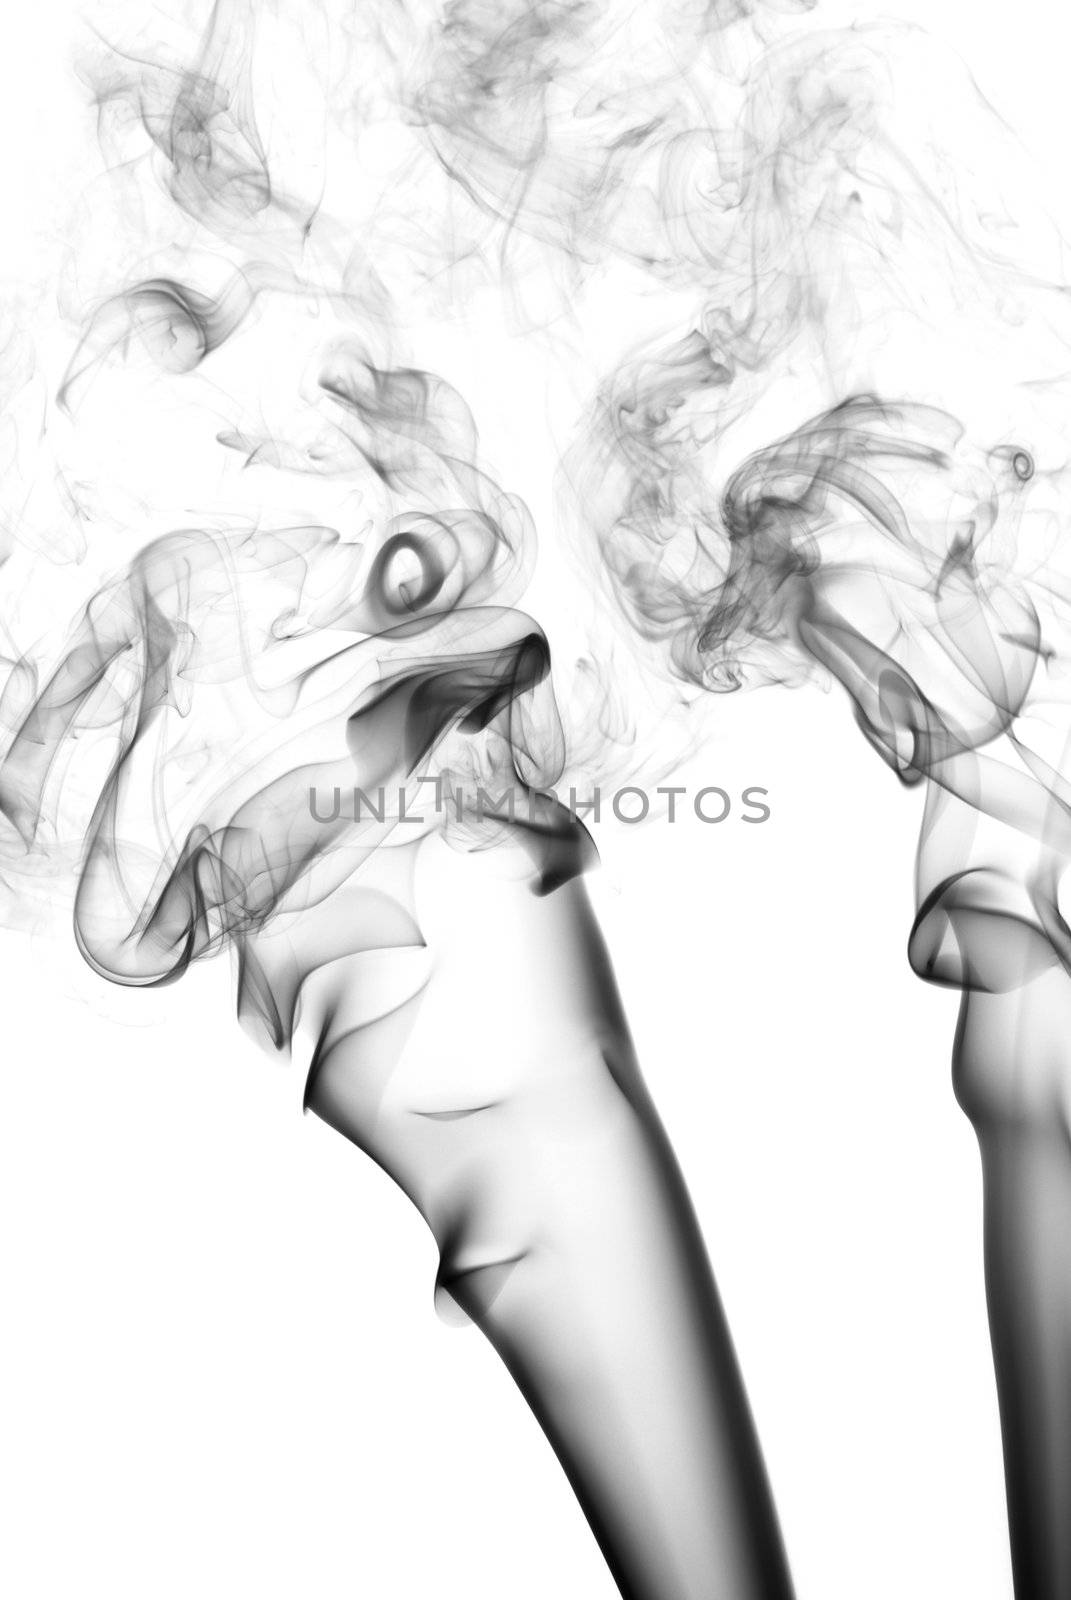 Smoke by mimocas29